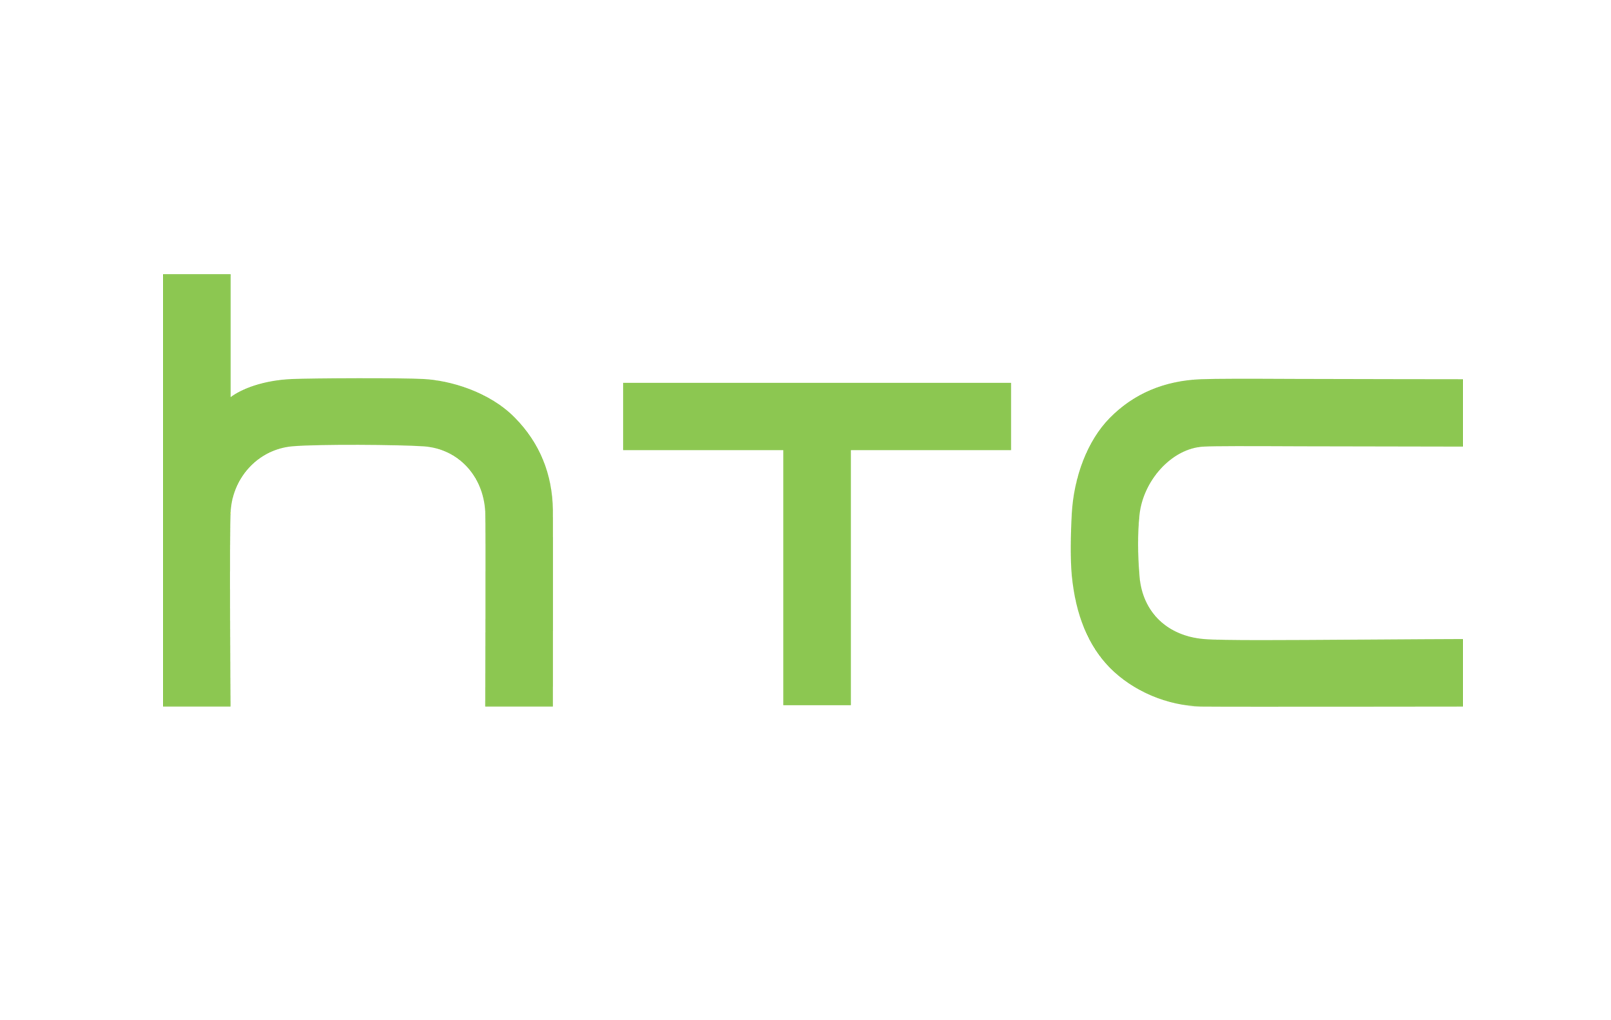 htc-logo